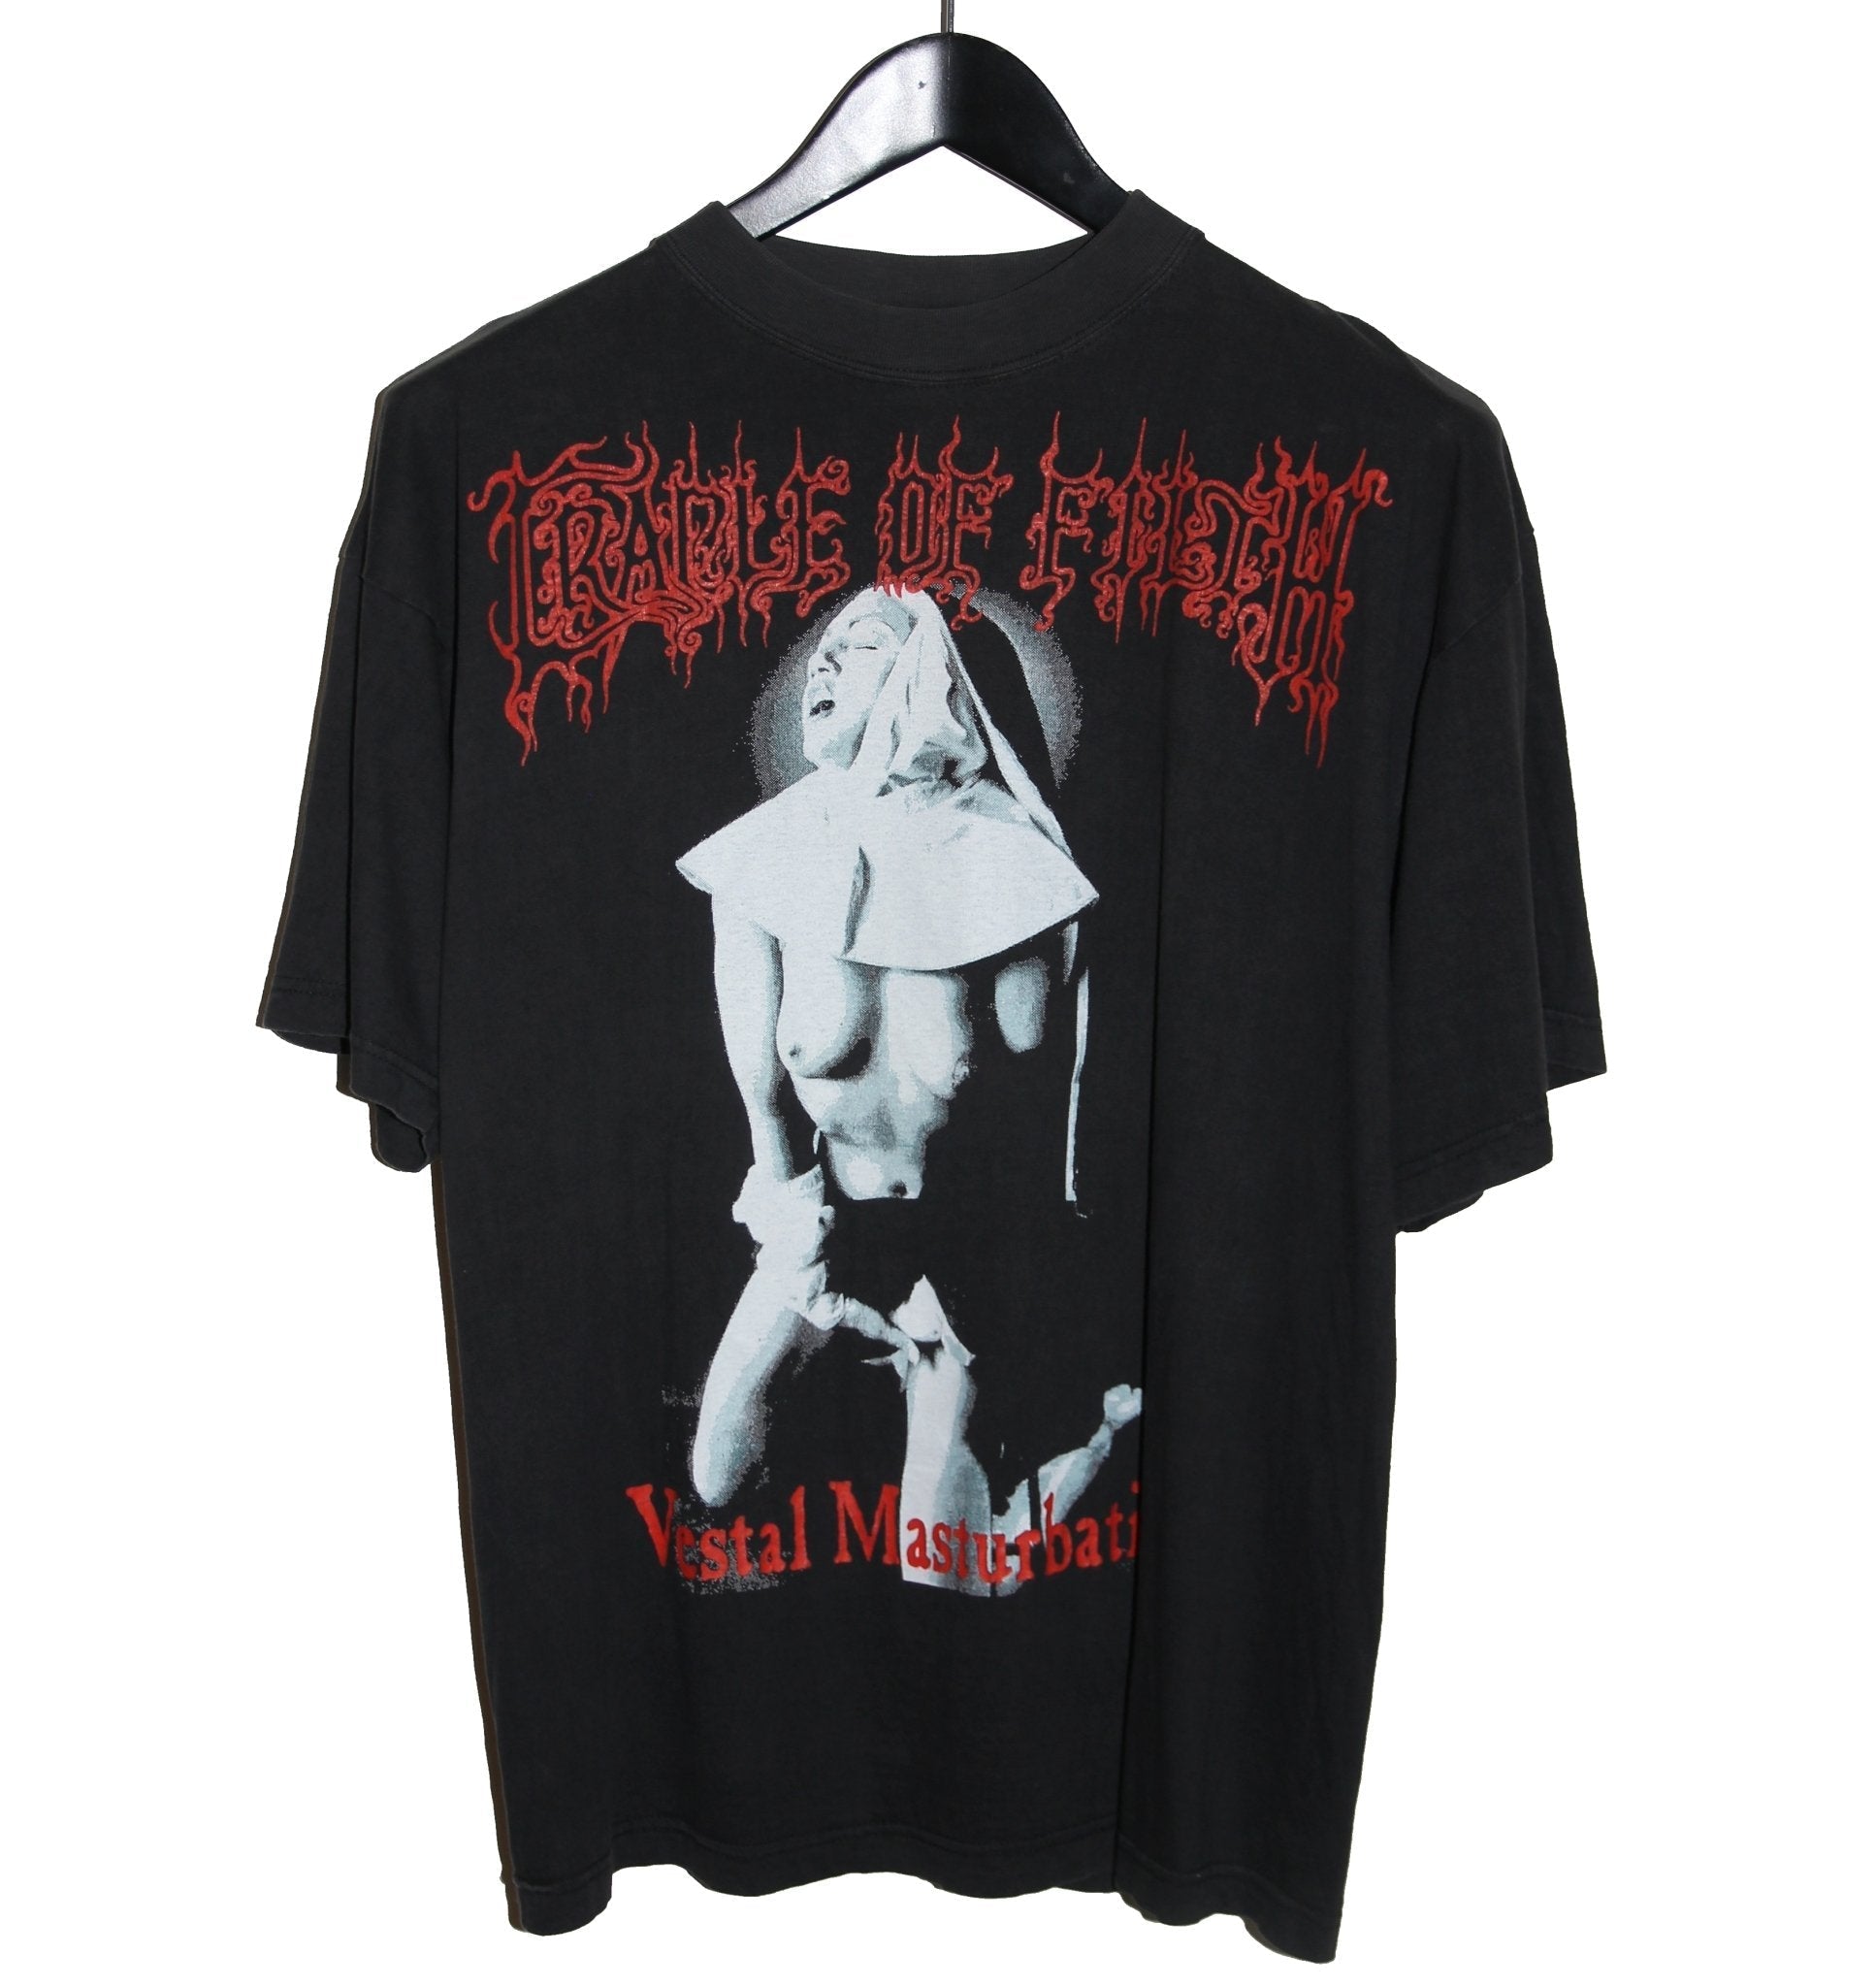 Cradle of Filth 1995 Vestal Masturbation Tour Shirt - Faded AU